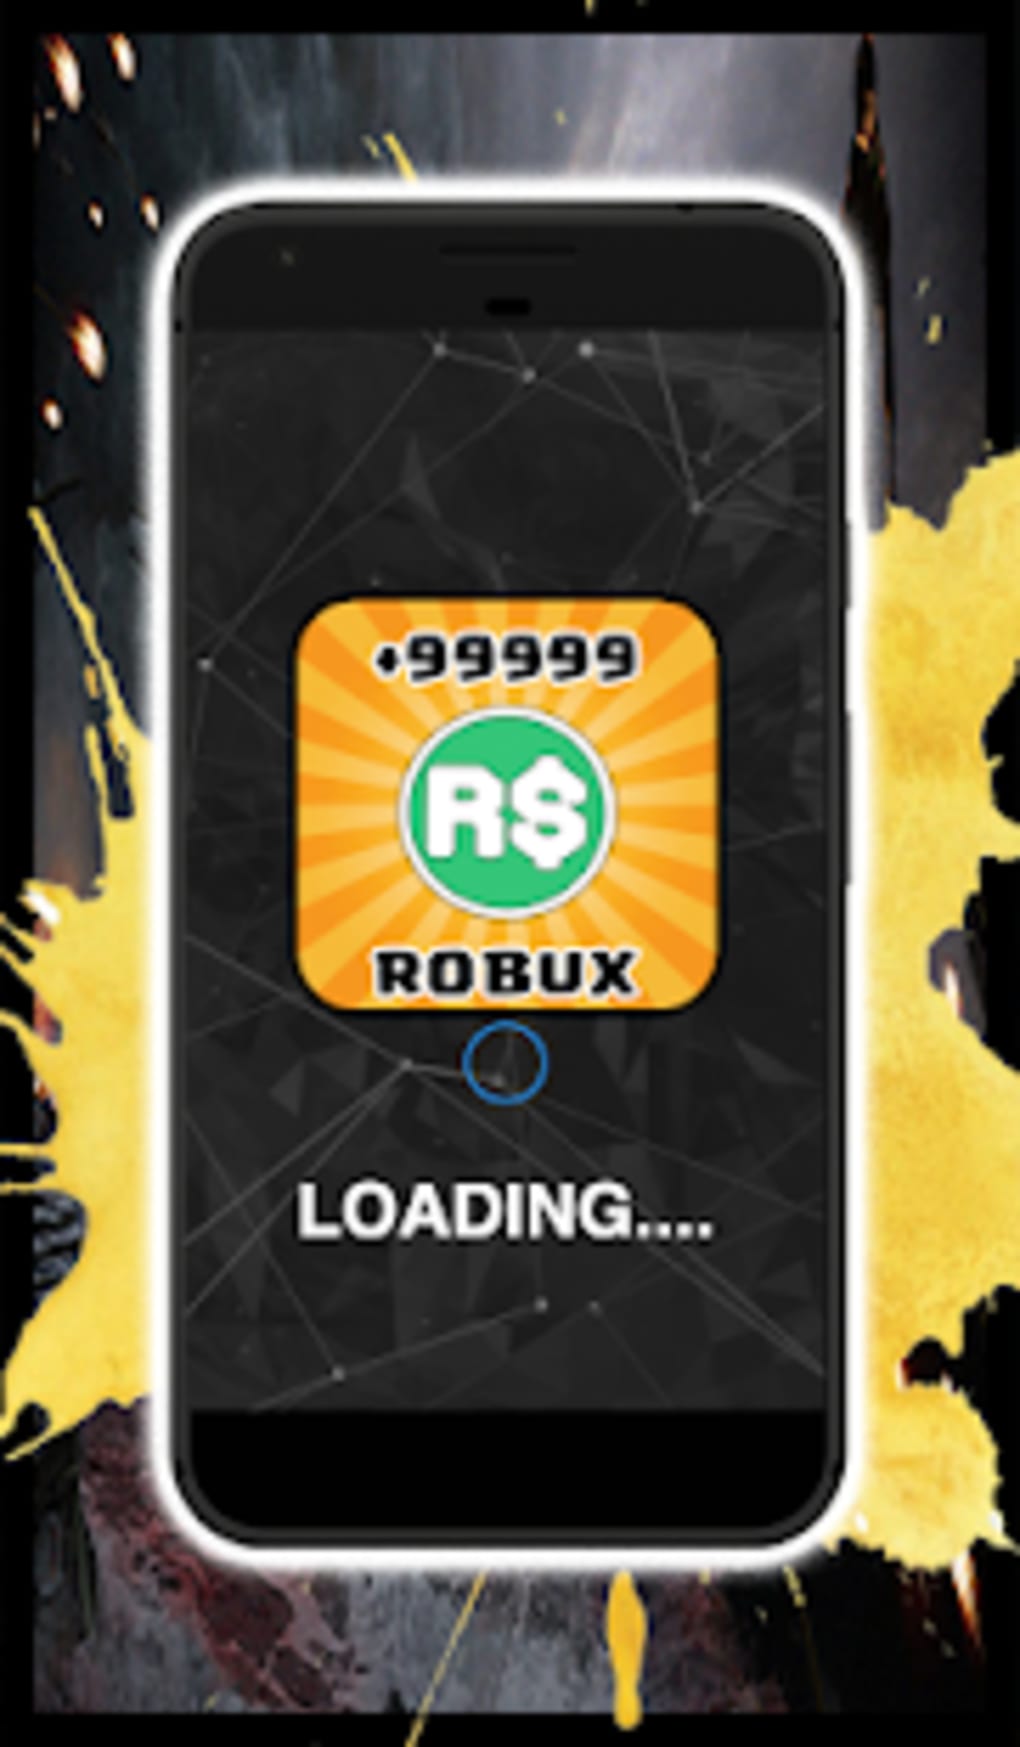 Free Robux Guide Buxgg Free Robux Without Human Verification - #U0e14#U0e32#U0e27#U0e19#U0e42#U0e2b#U0e25#U0e14 daily free robux tips tricks robux 2k19 apk6